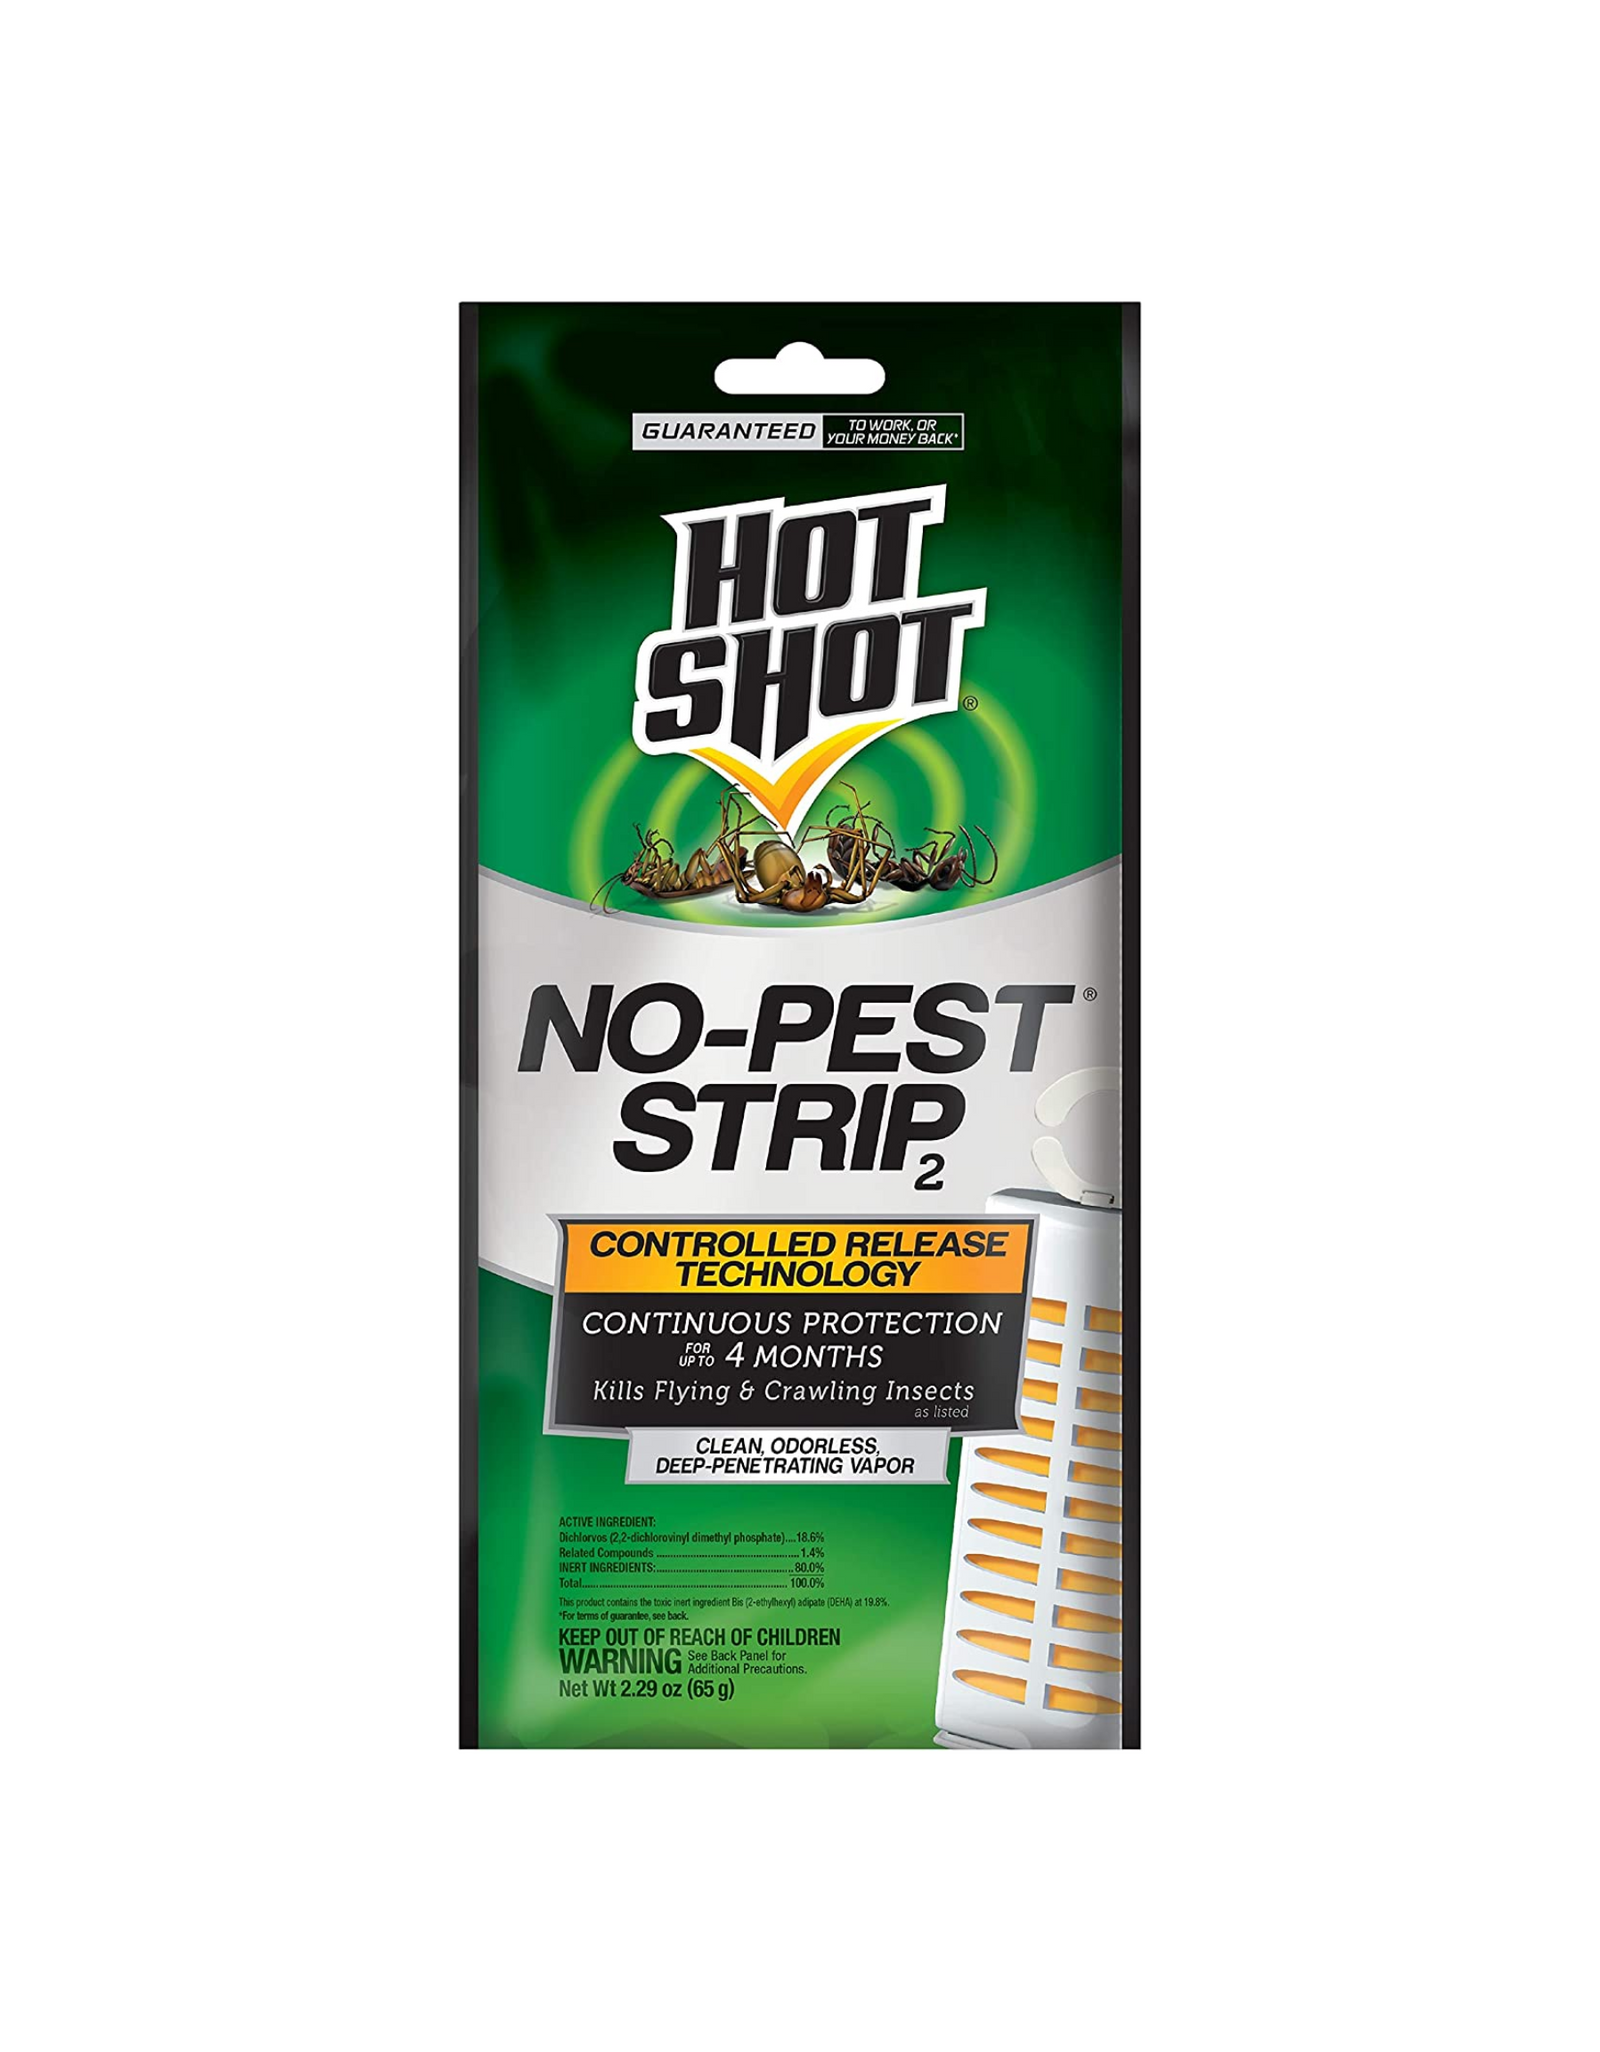 Hot Shot No-Pest Strip, Penetrating Vapor, 2.29 oz each, 12 Pack